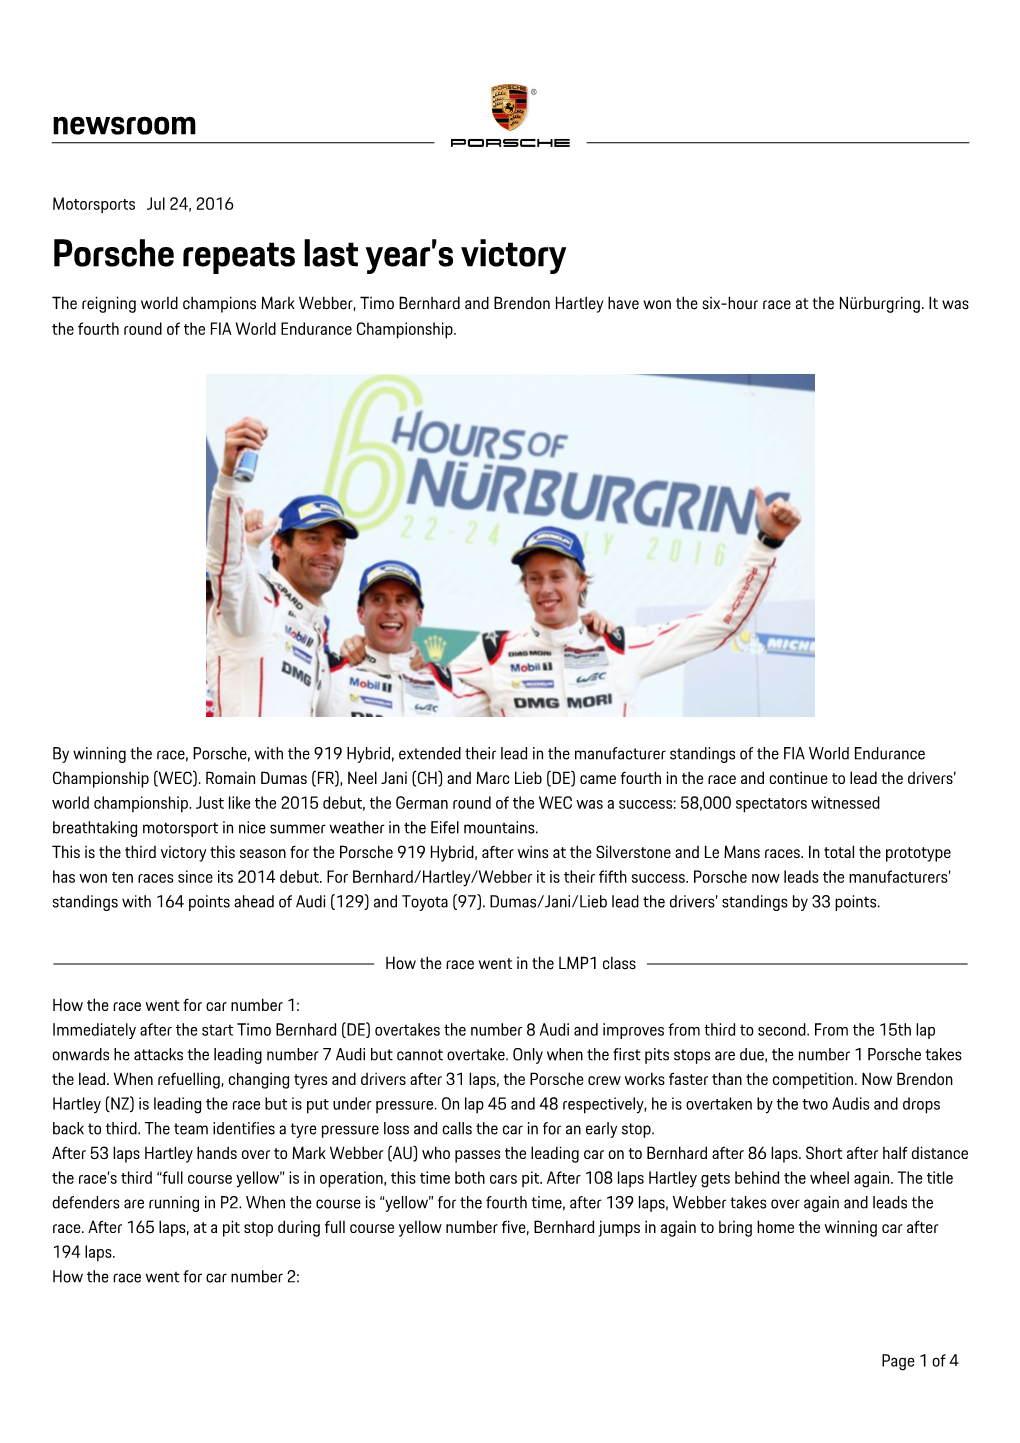 Porsche Repeats Last Year's Victory